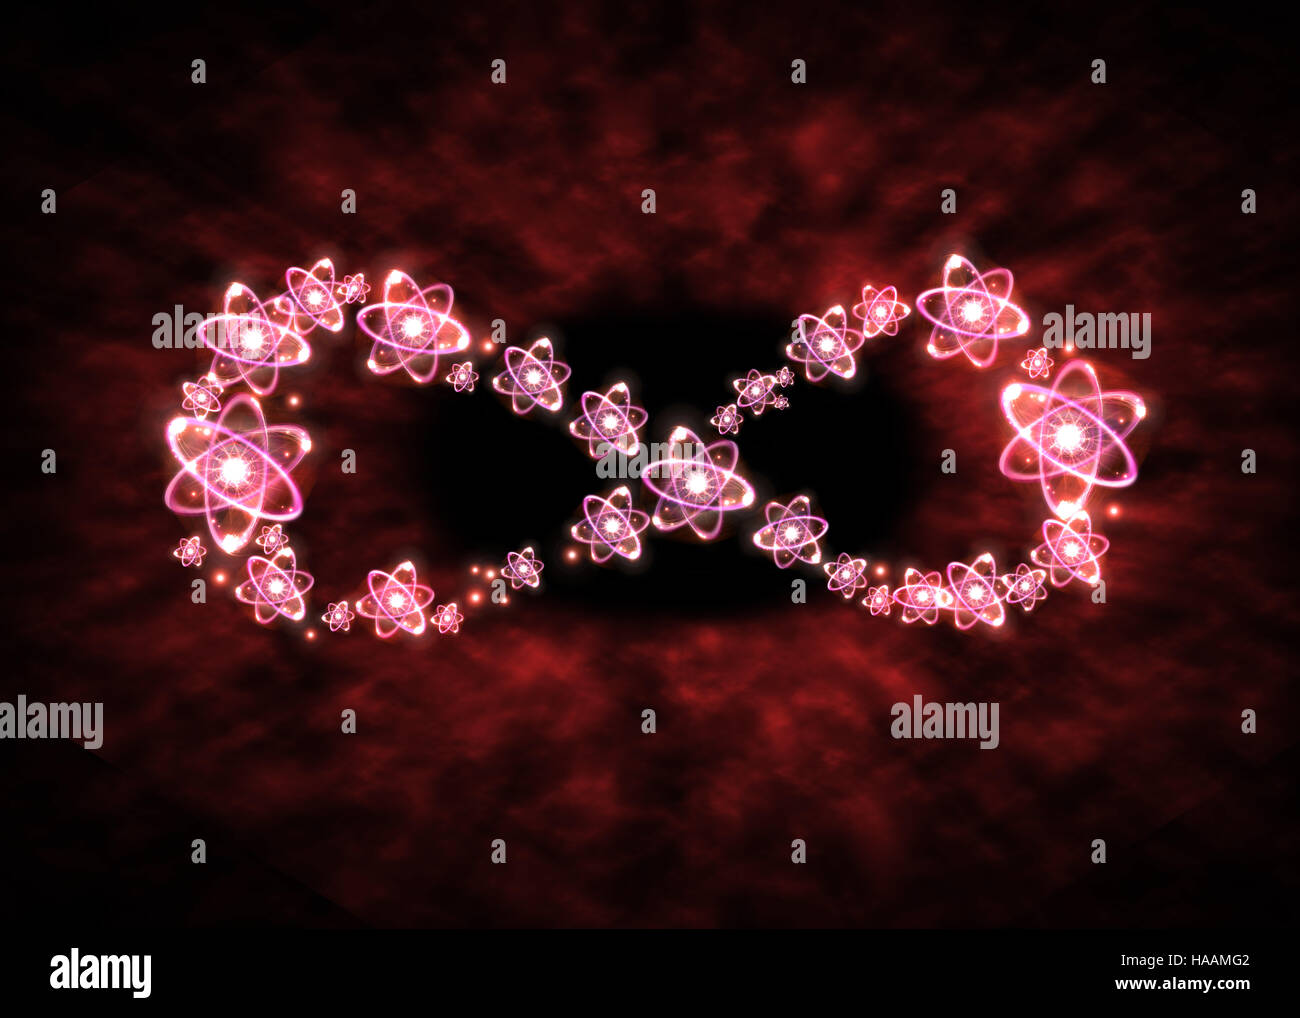 Atom particles make up shape of infinity symbol, 3D illustration Stock Photo